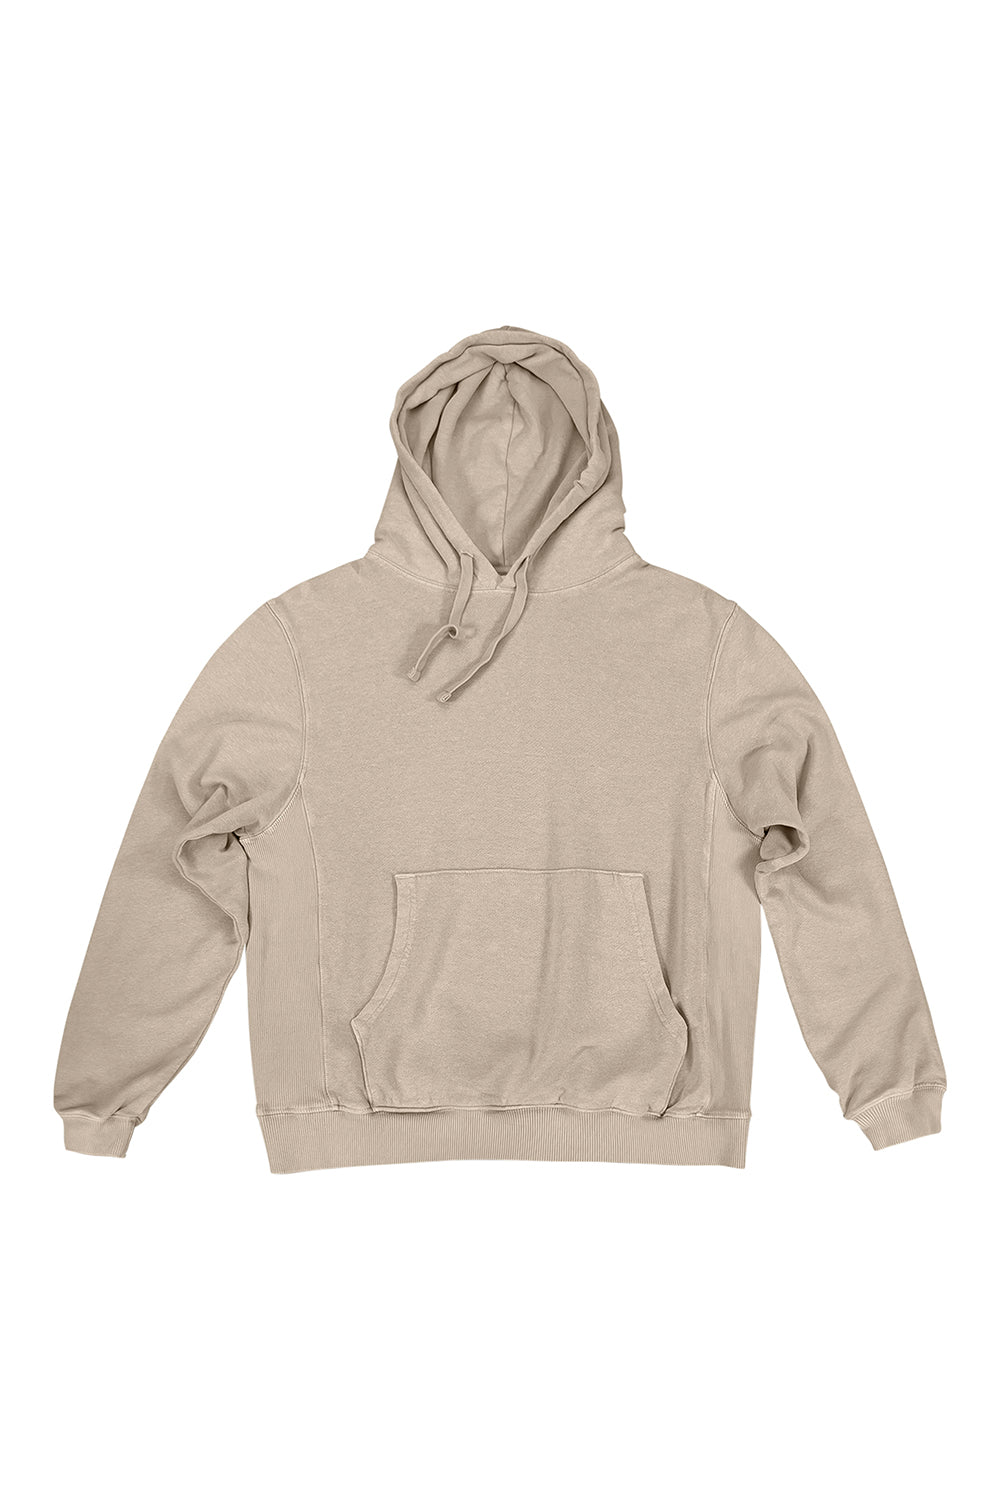 Montauk Hooded Sweatshirt | Jungmaven Hemp Clothing & Accessories / Color: Canvas